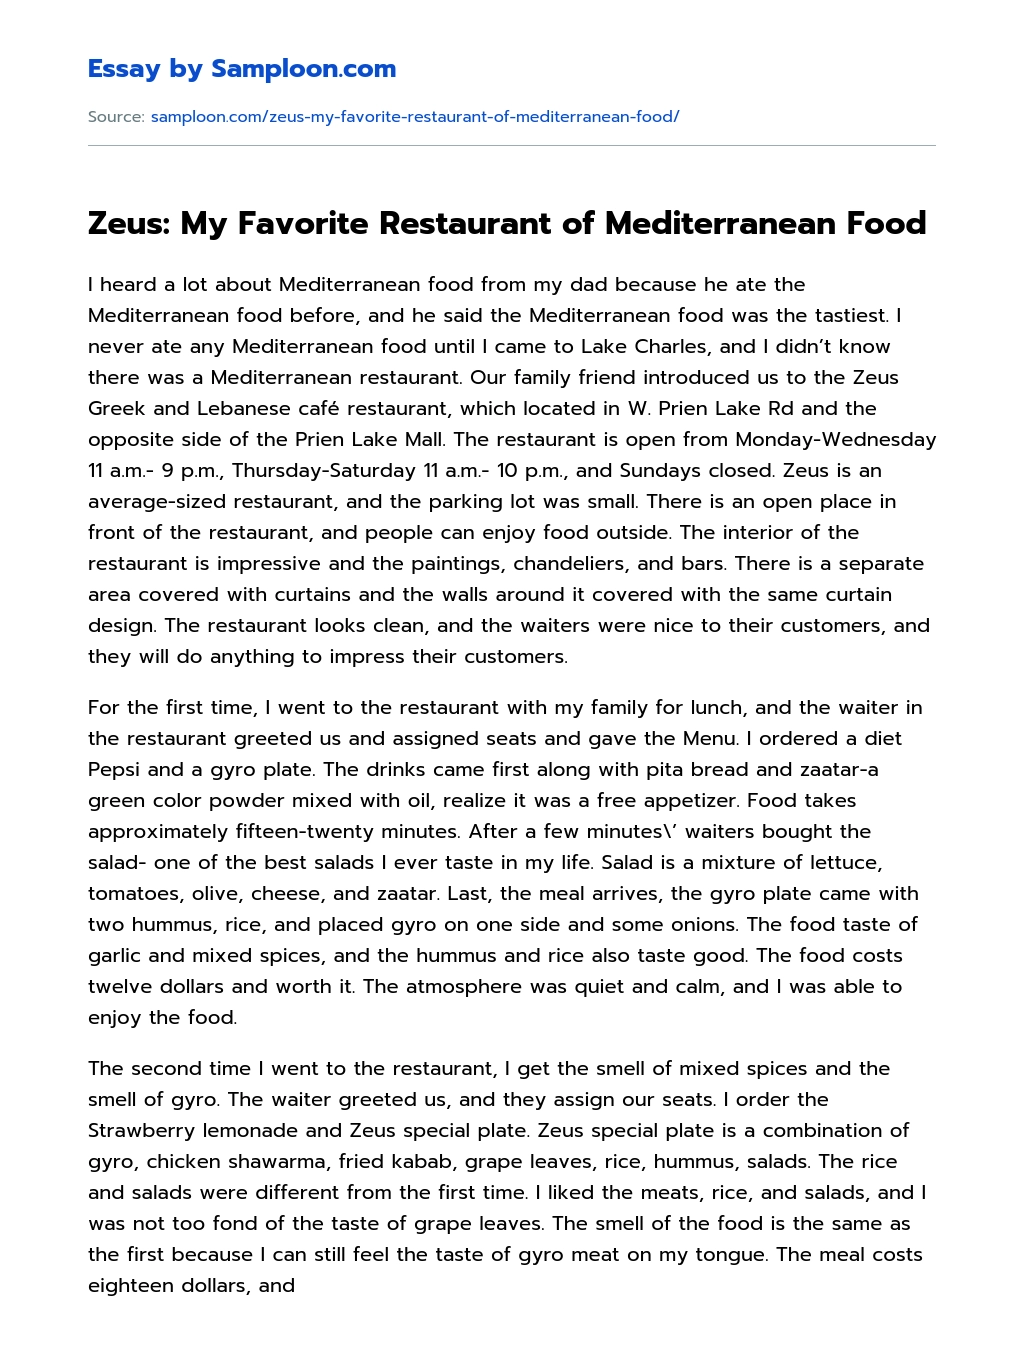 Zeus: My Favorite Restaurant of Mediterranean Food essay